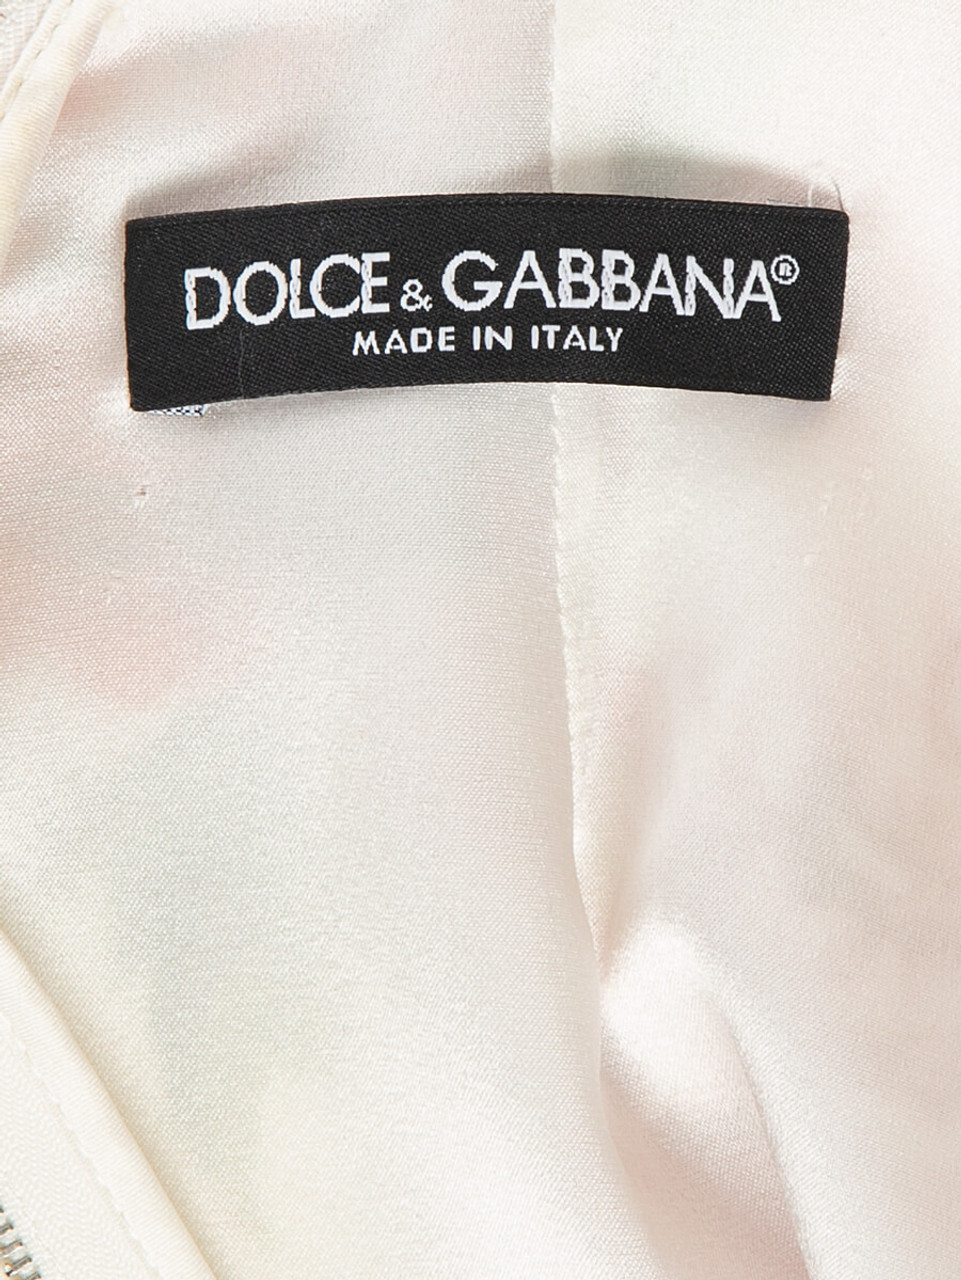 Dolce & Gabbana Women's Floral Dress, Size 18 UK, Multicolour, Silk